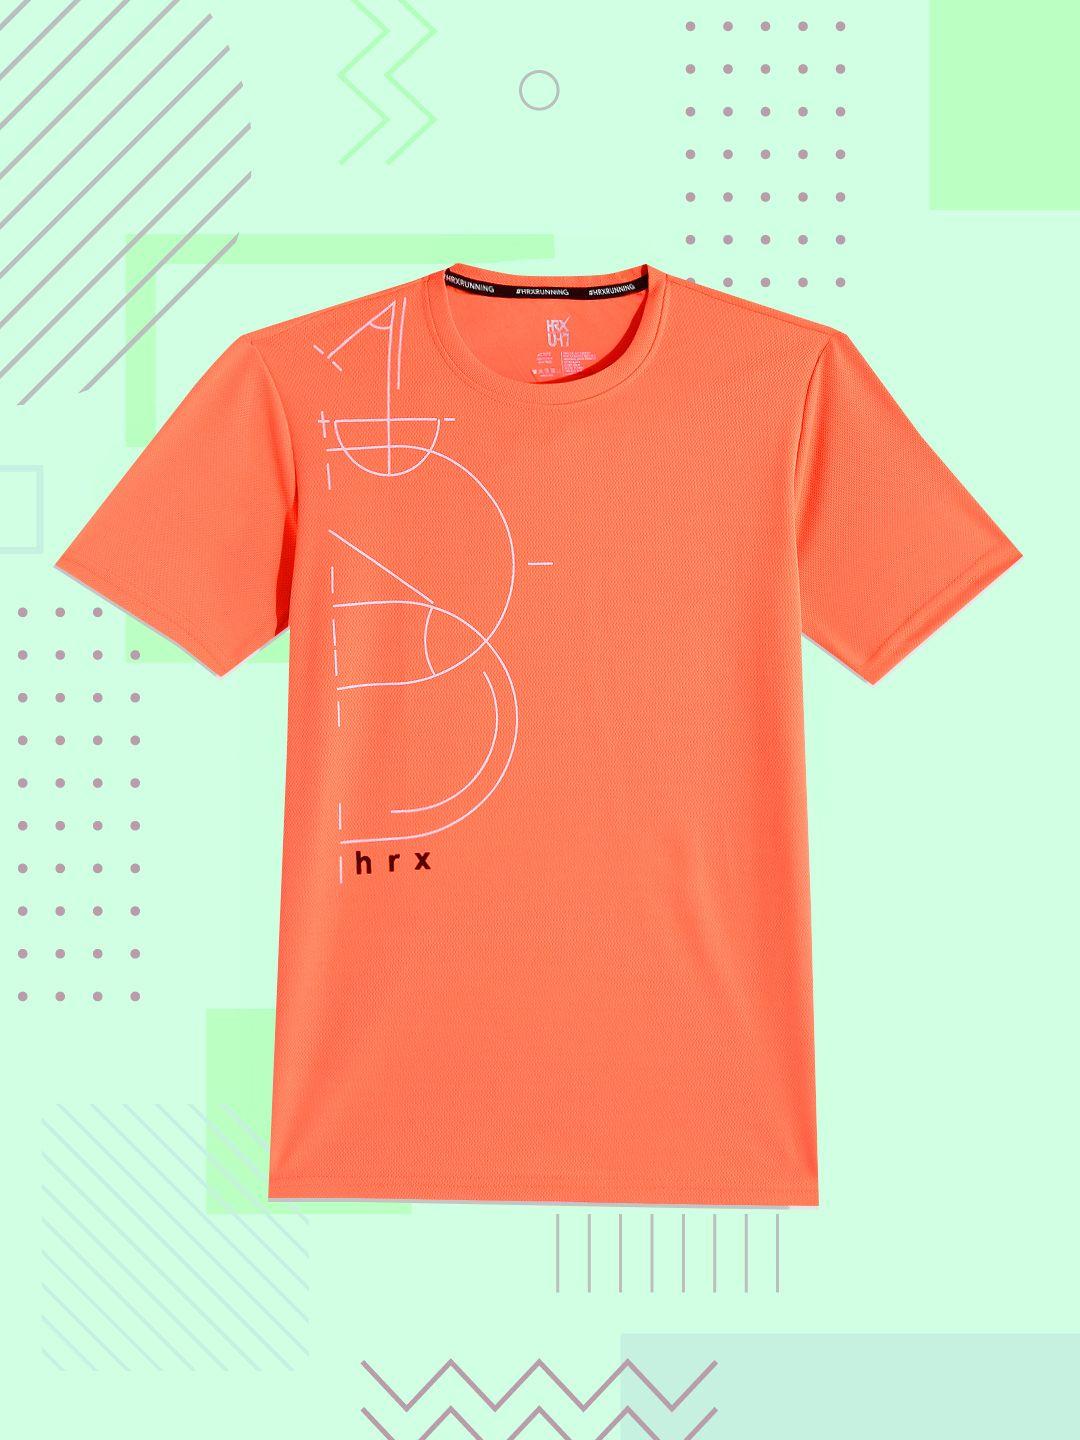 hrx by hrithik roshan running boys neon orange rapid-dry typography tshirt